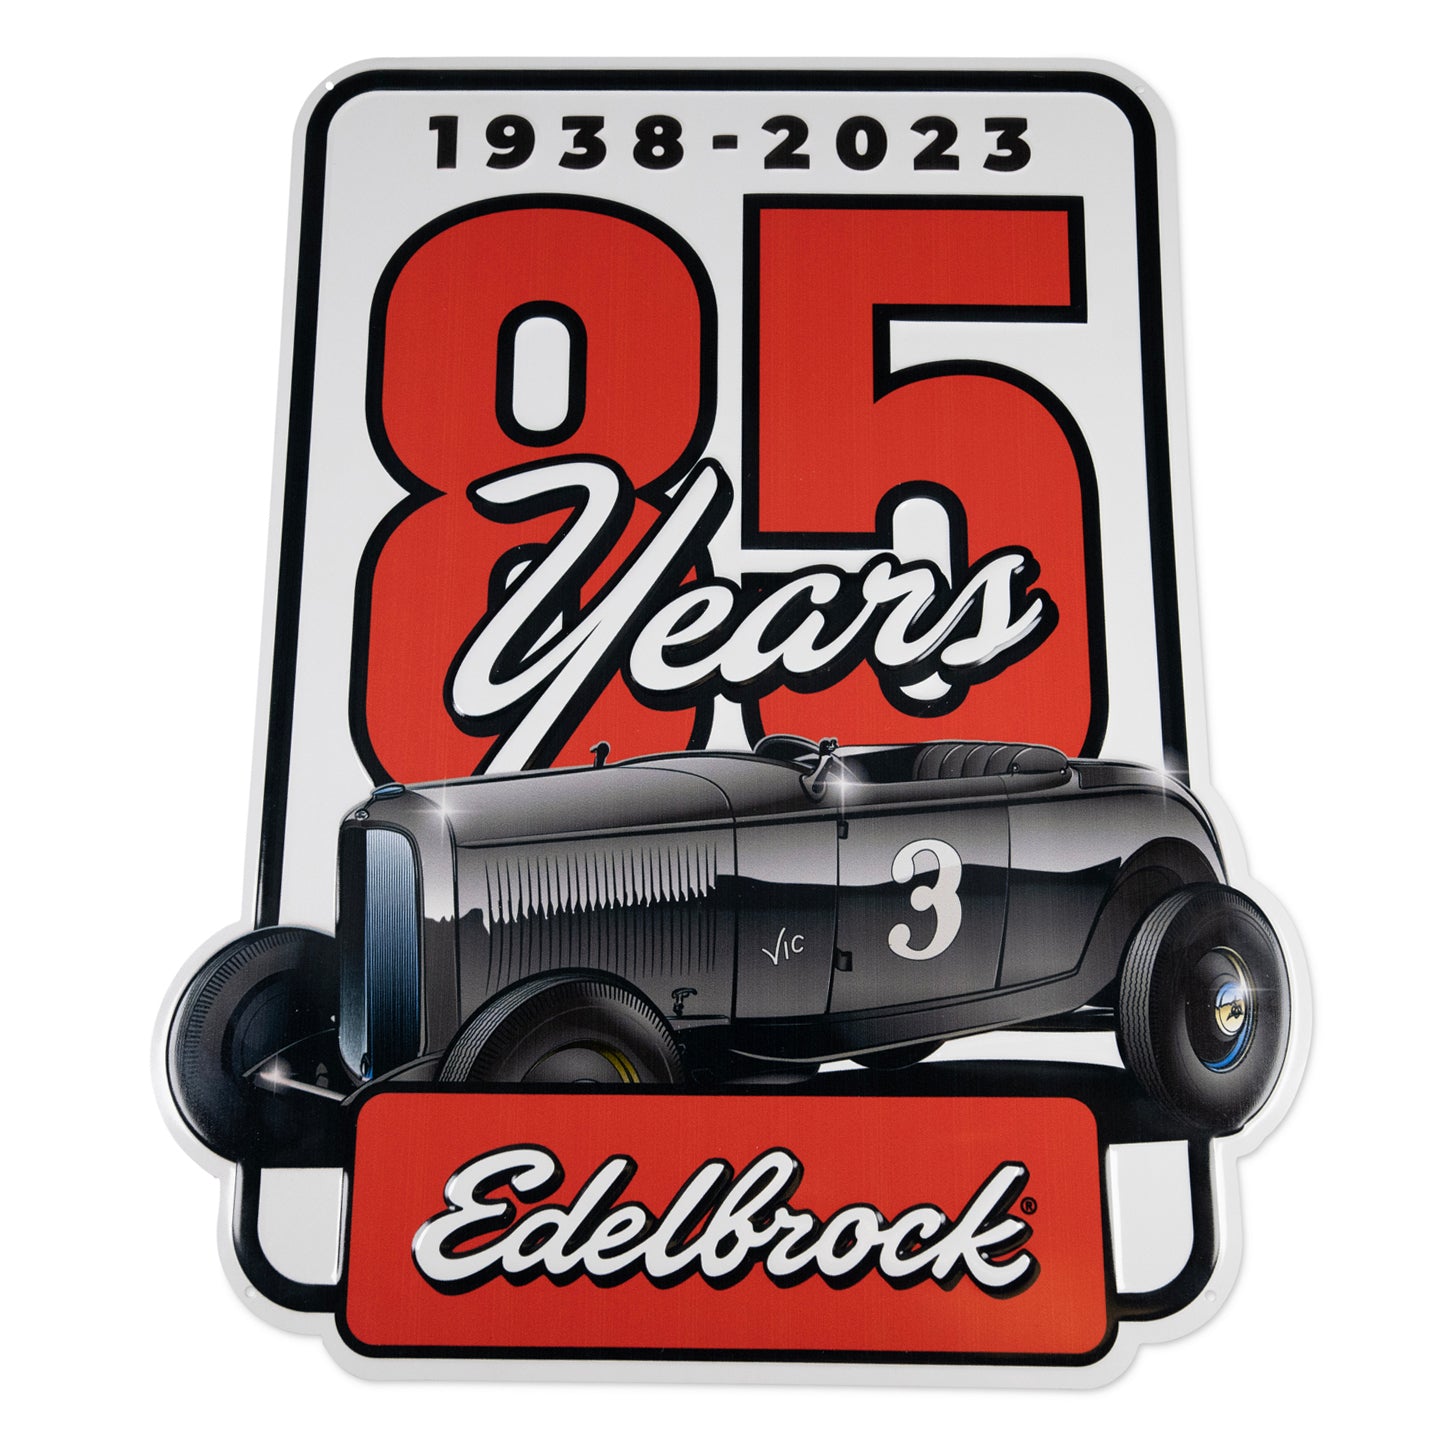 Edelbrock 85 Years Tin Garage Sign 189185